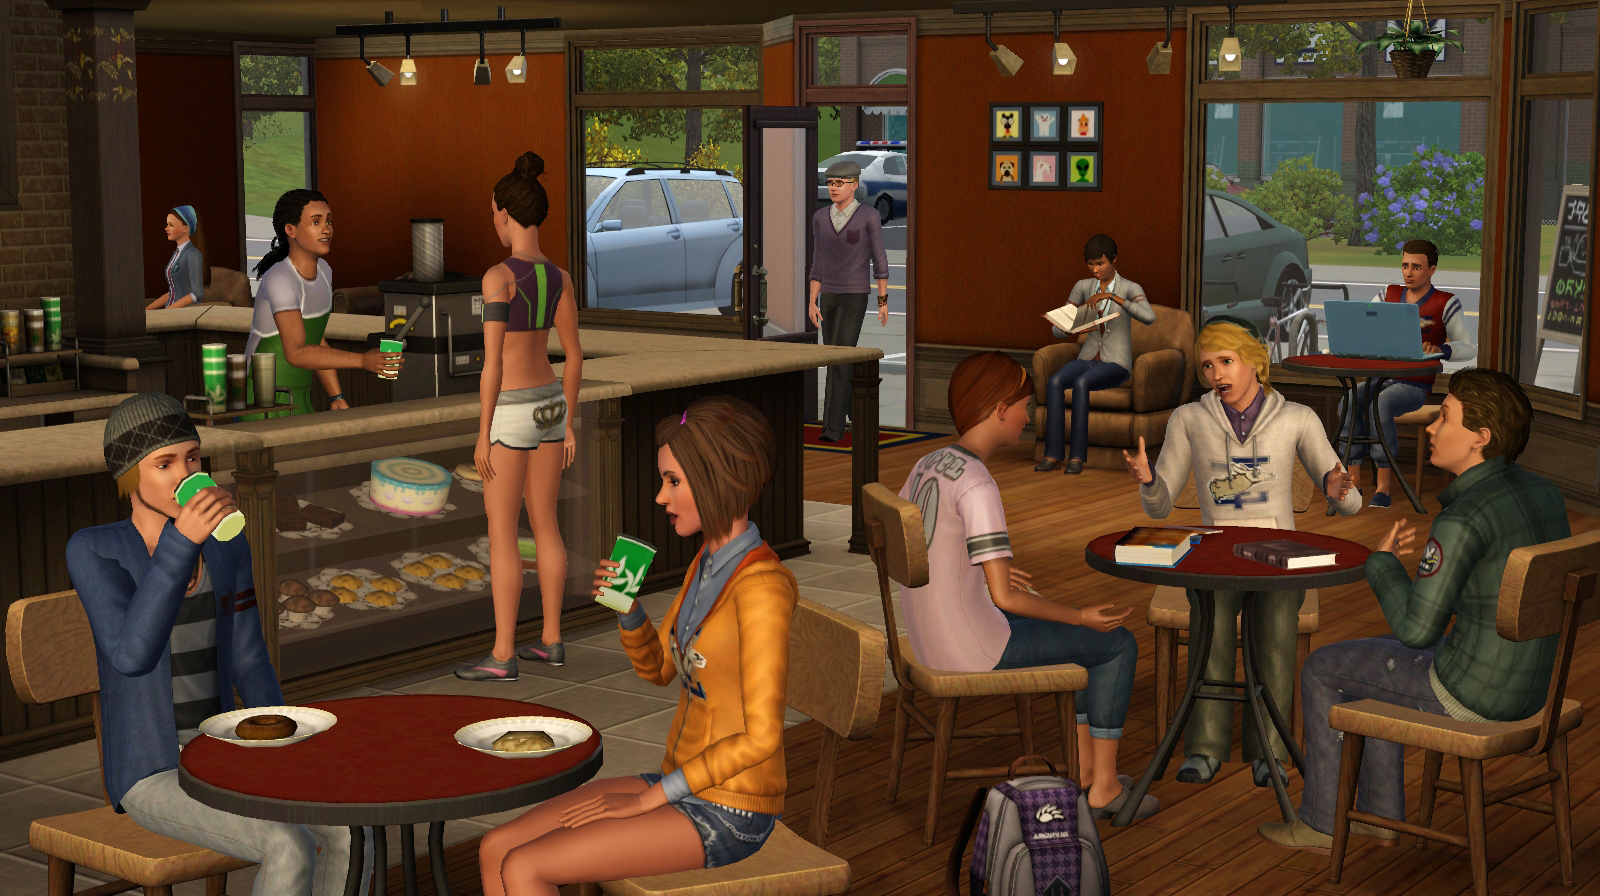 Electronic Arts Sims 3: University Life, EA, PC Software, 014633198089 - image 4 of 6